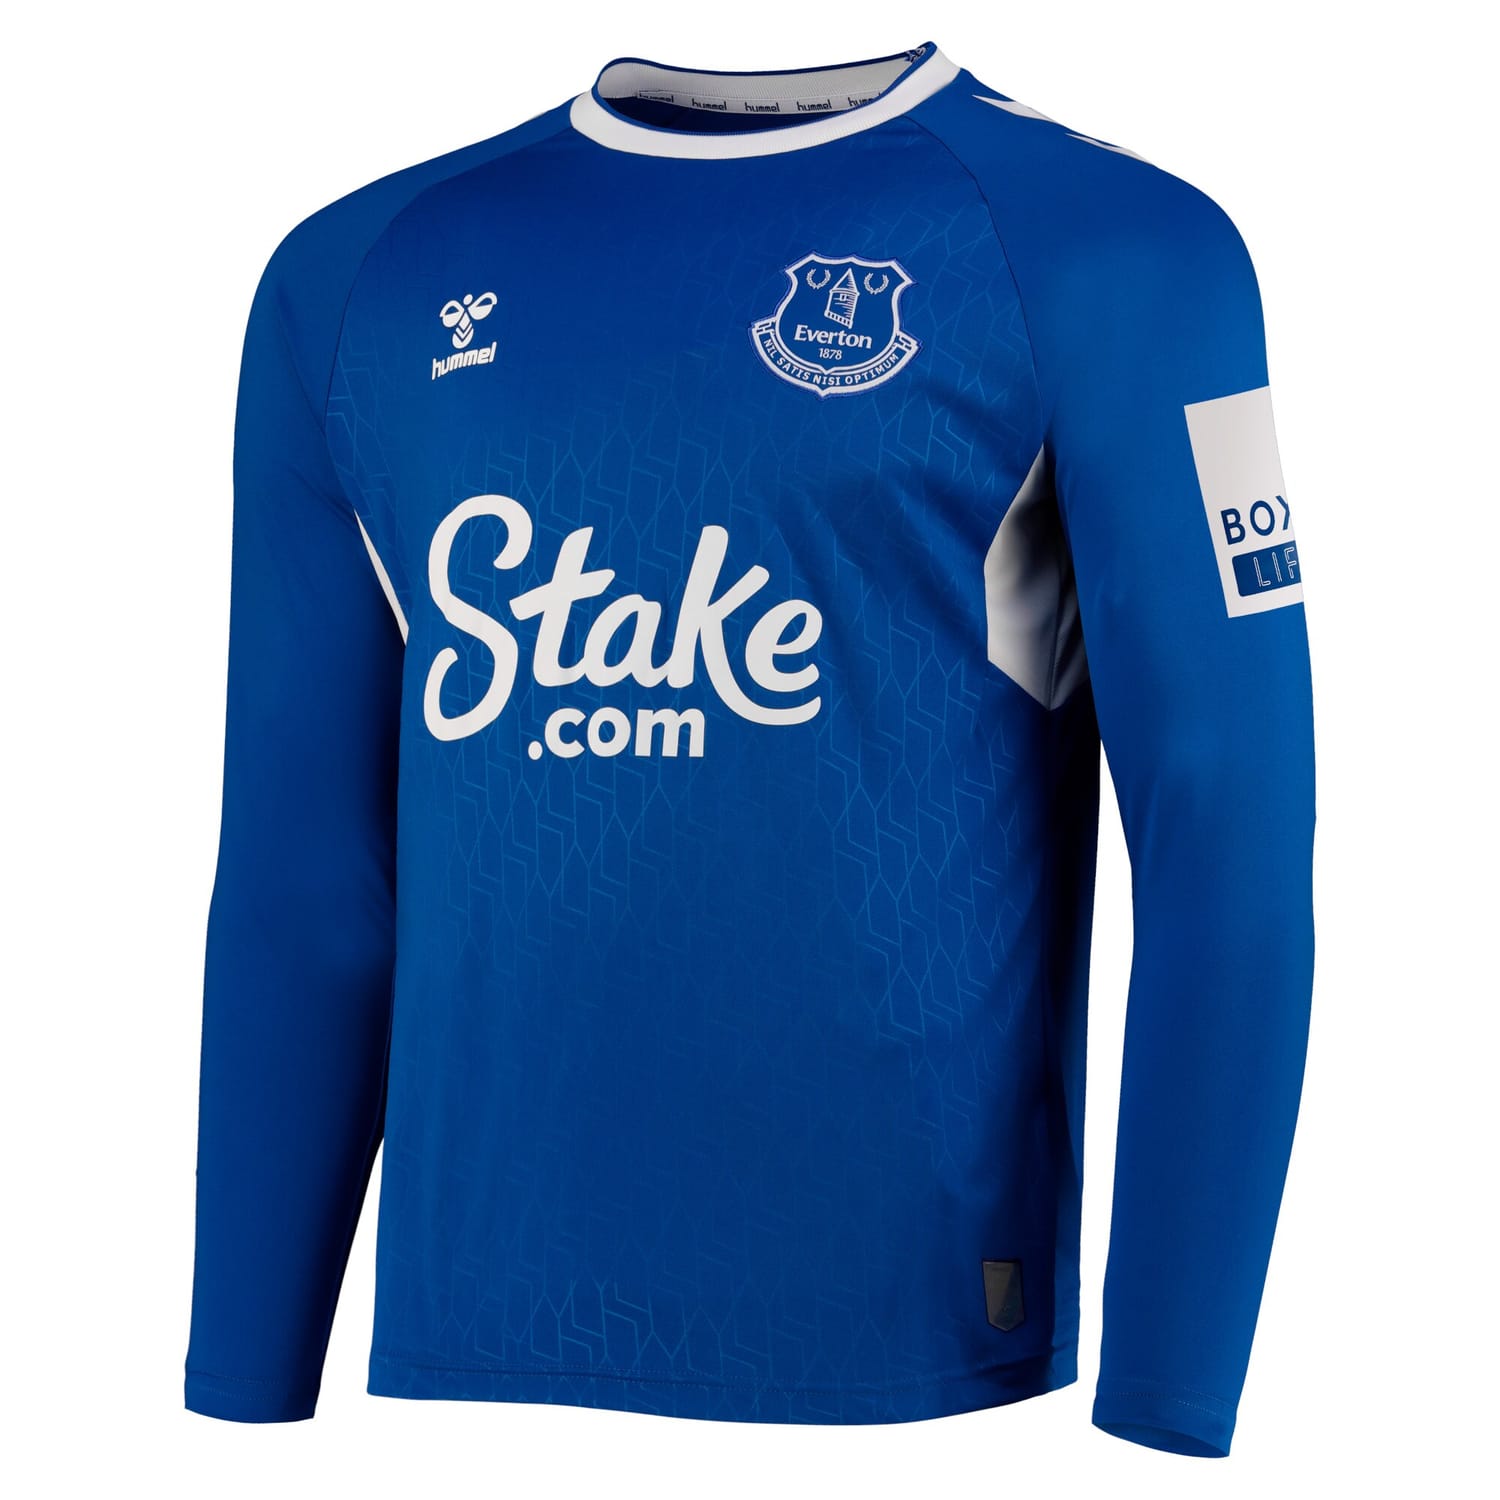 Premier League Everton Home Jersey Shirt Long Sleeve 2022-23 player Aurora Galli 22 printing for Men